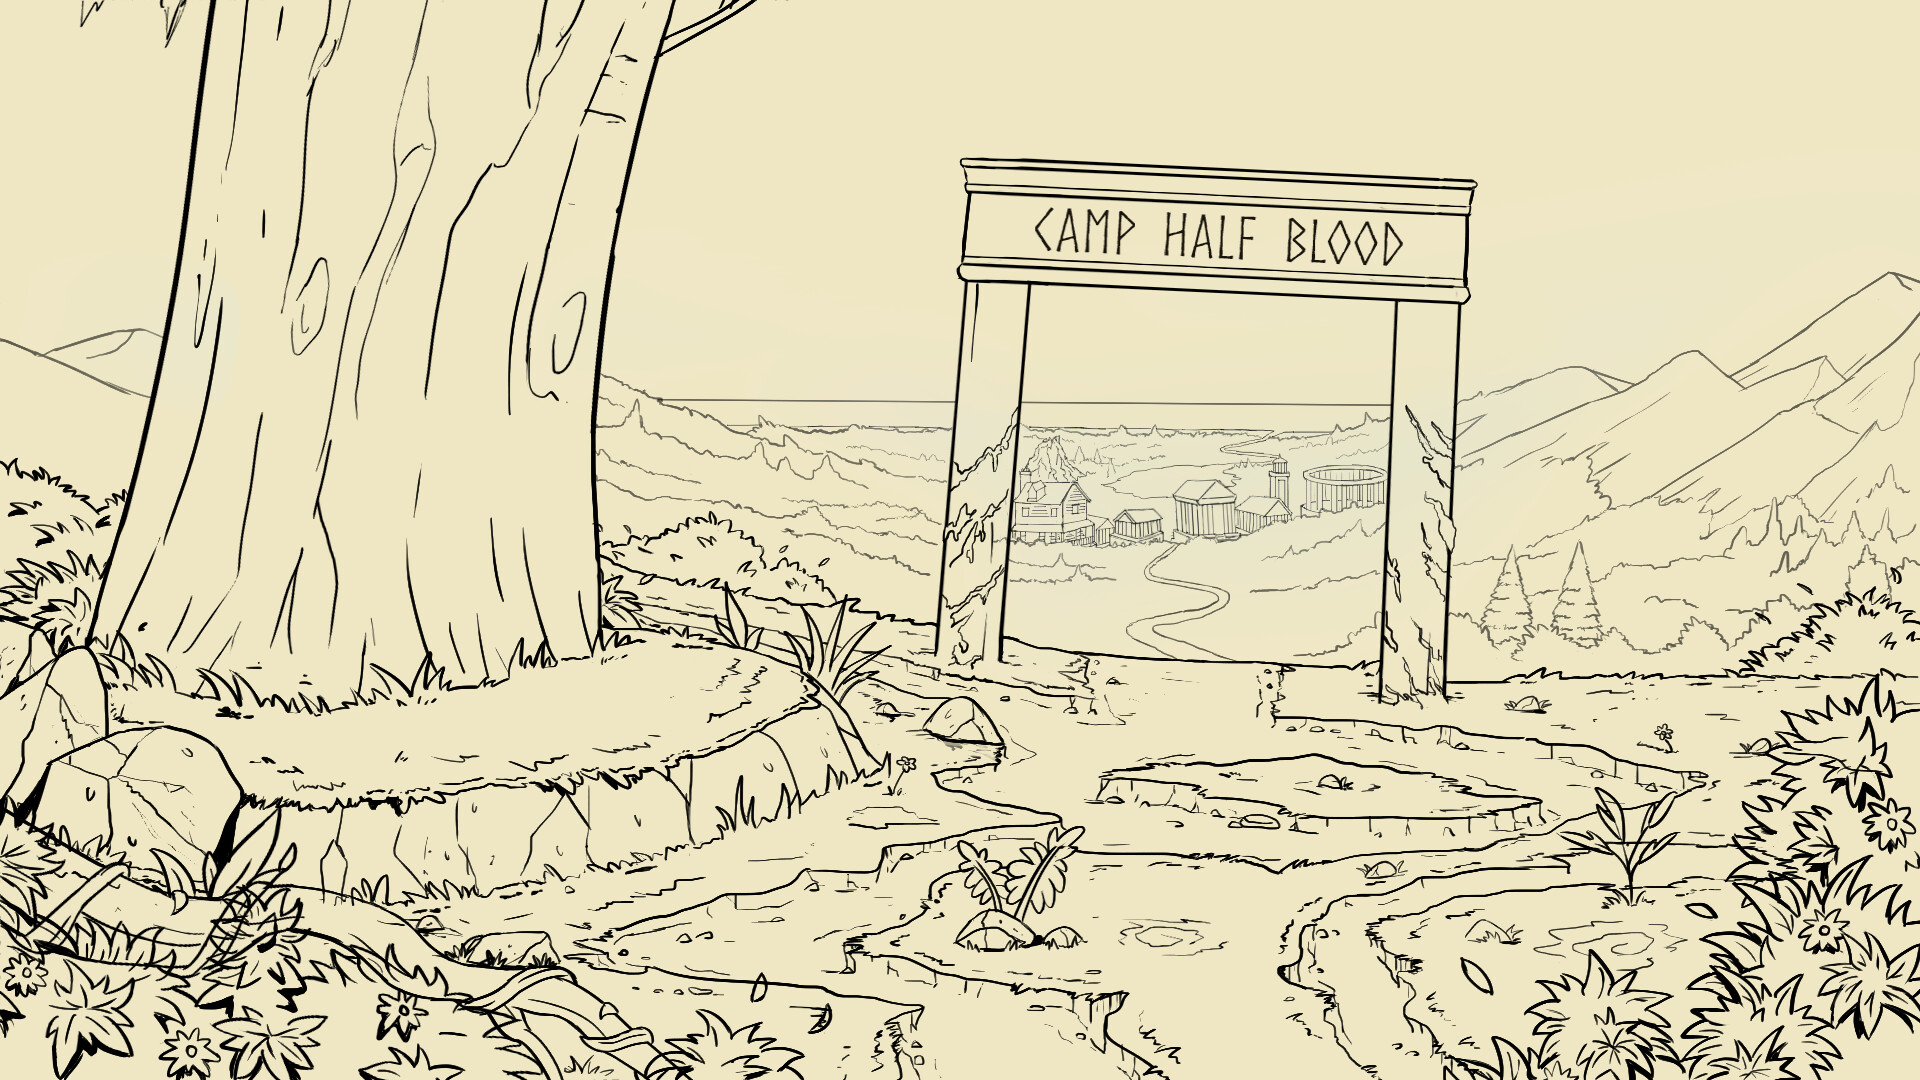 Camp Half Blood